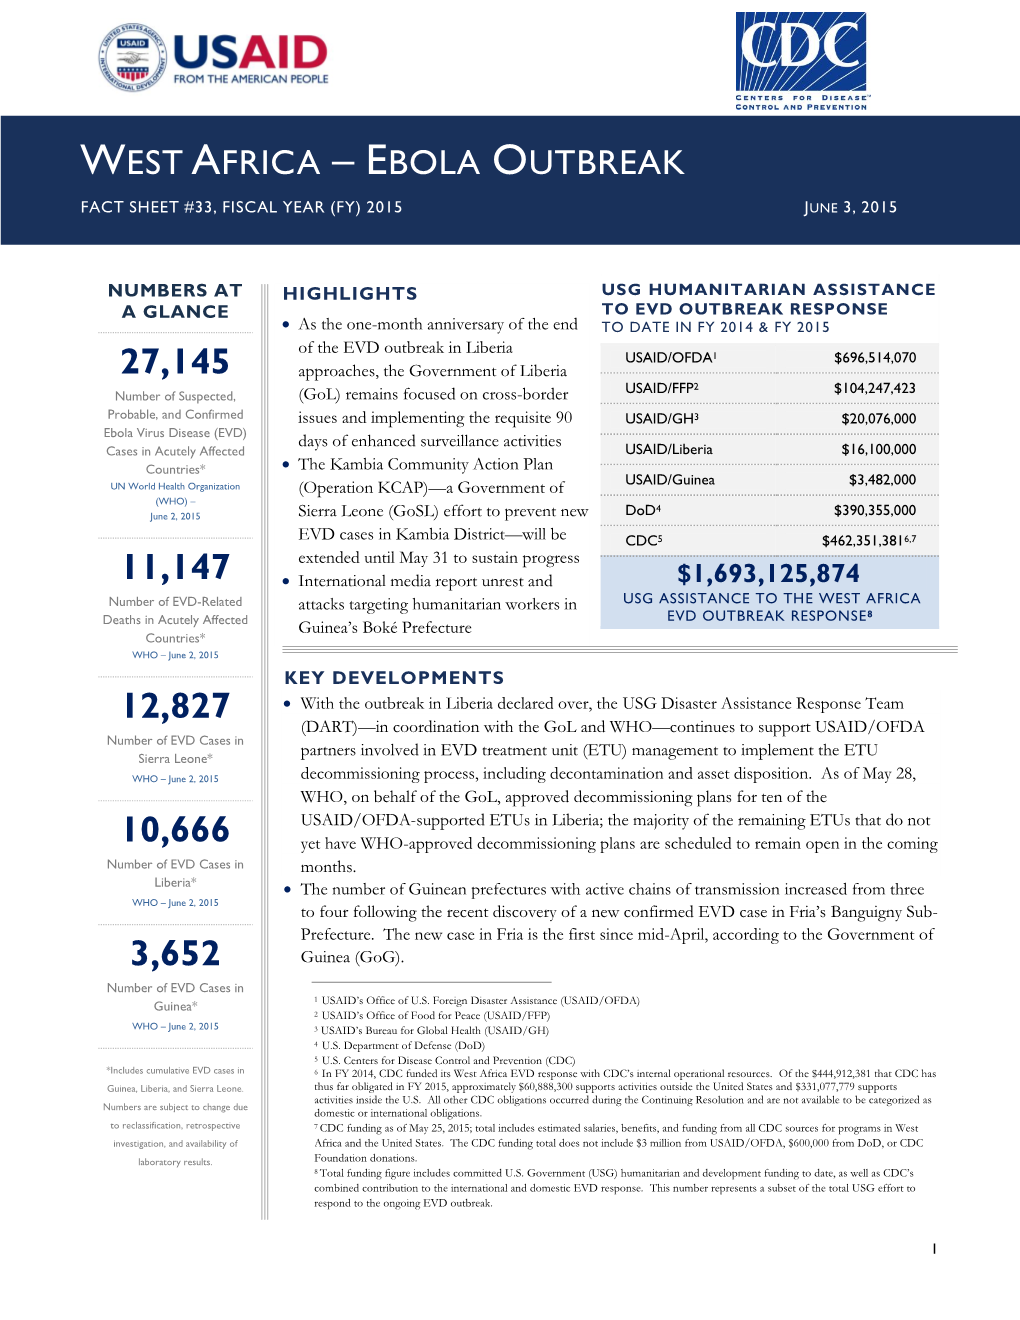 USG West Africa Ebola Outbreak Fact Sheet